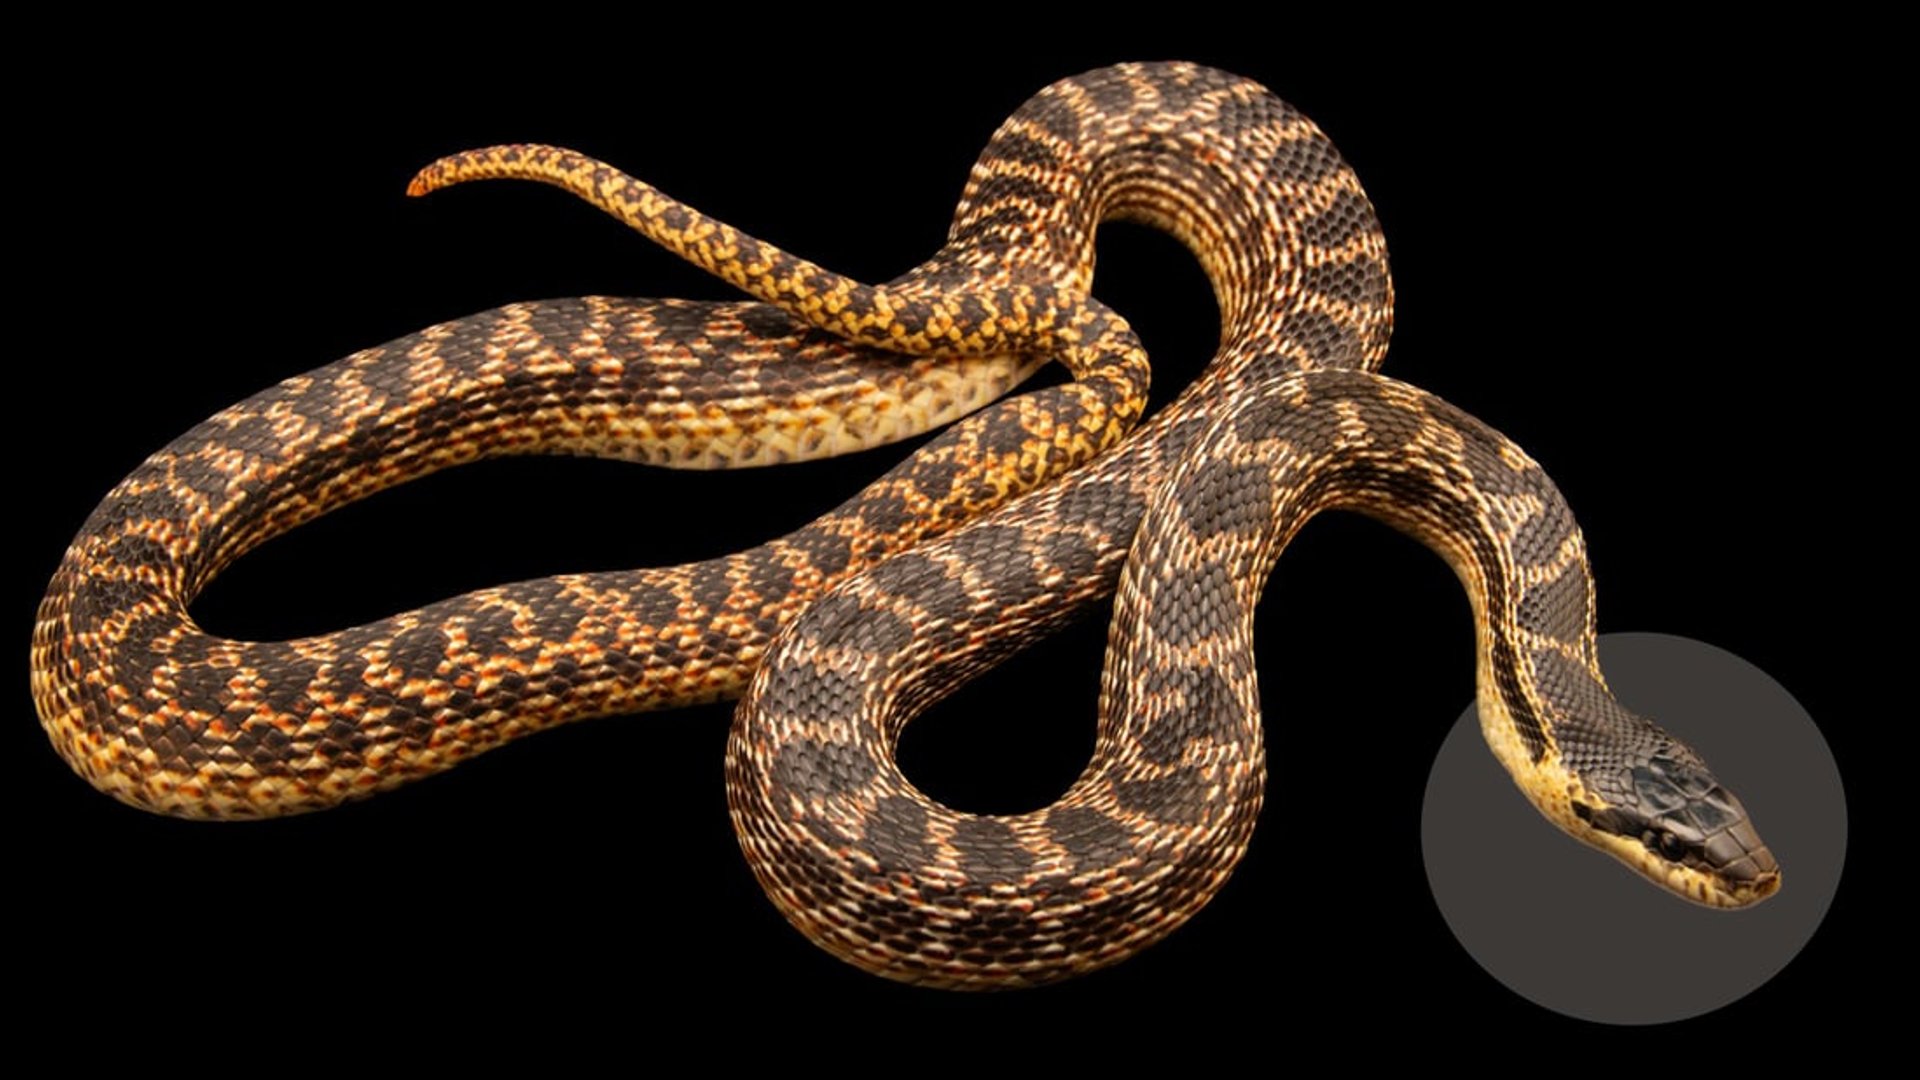 New species of snake discovered in Kurdistan